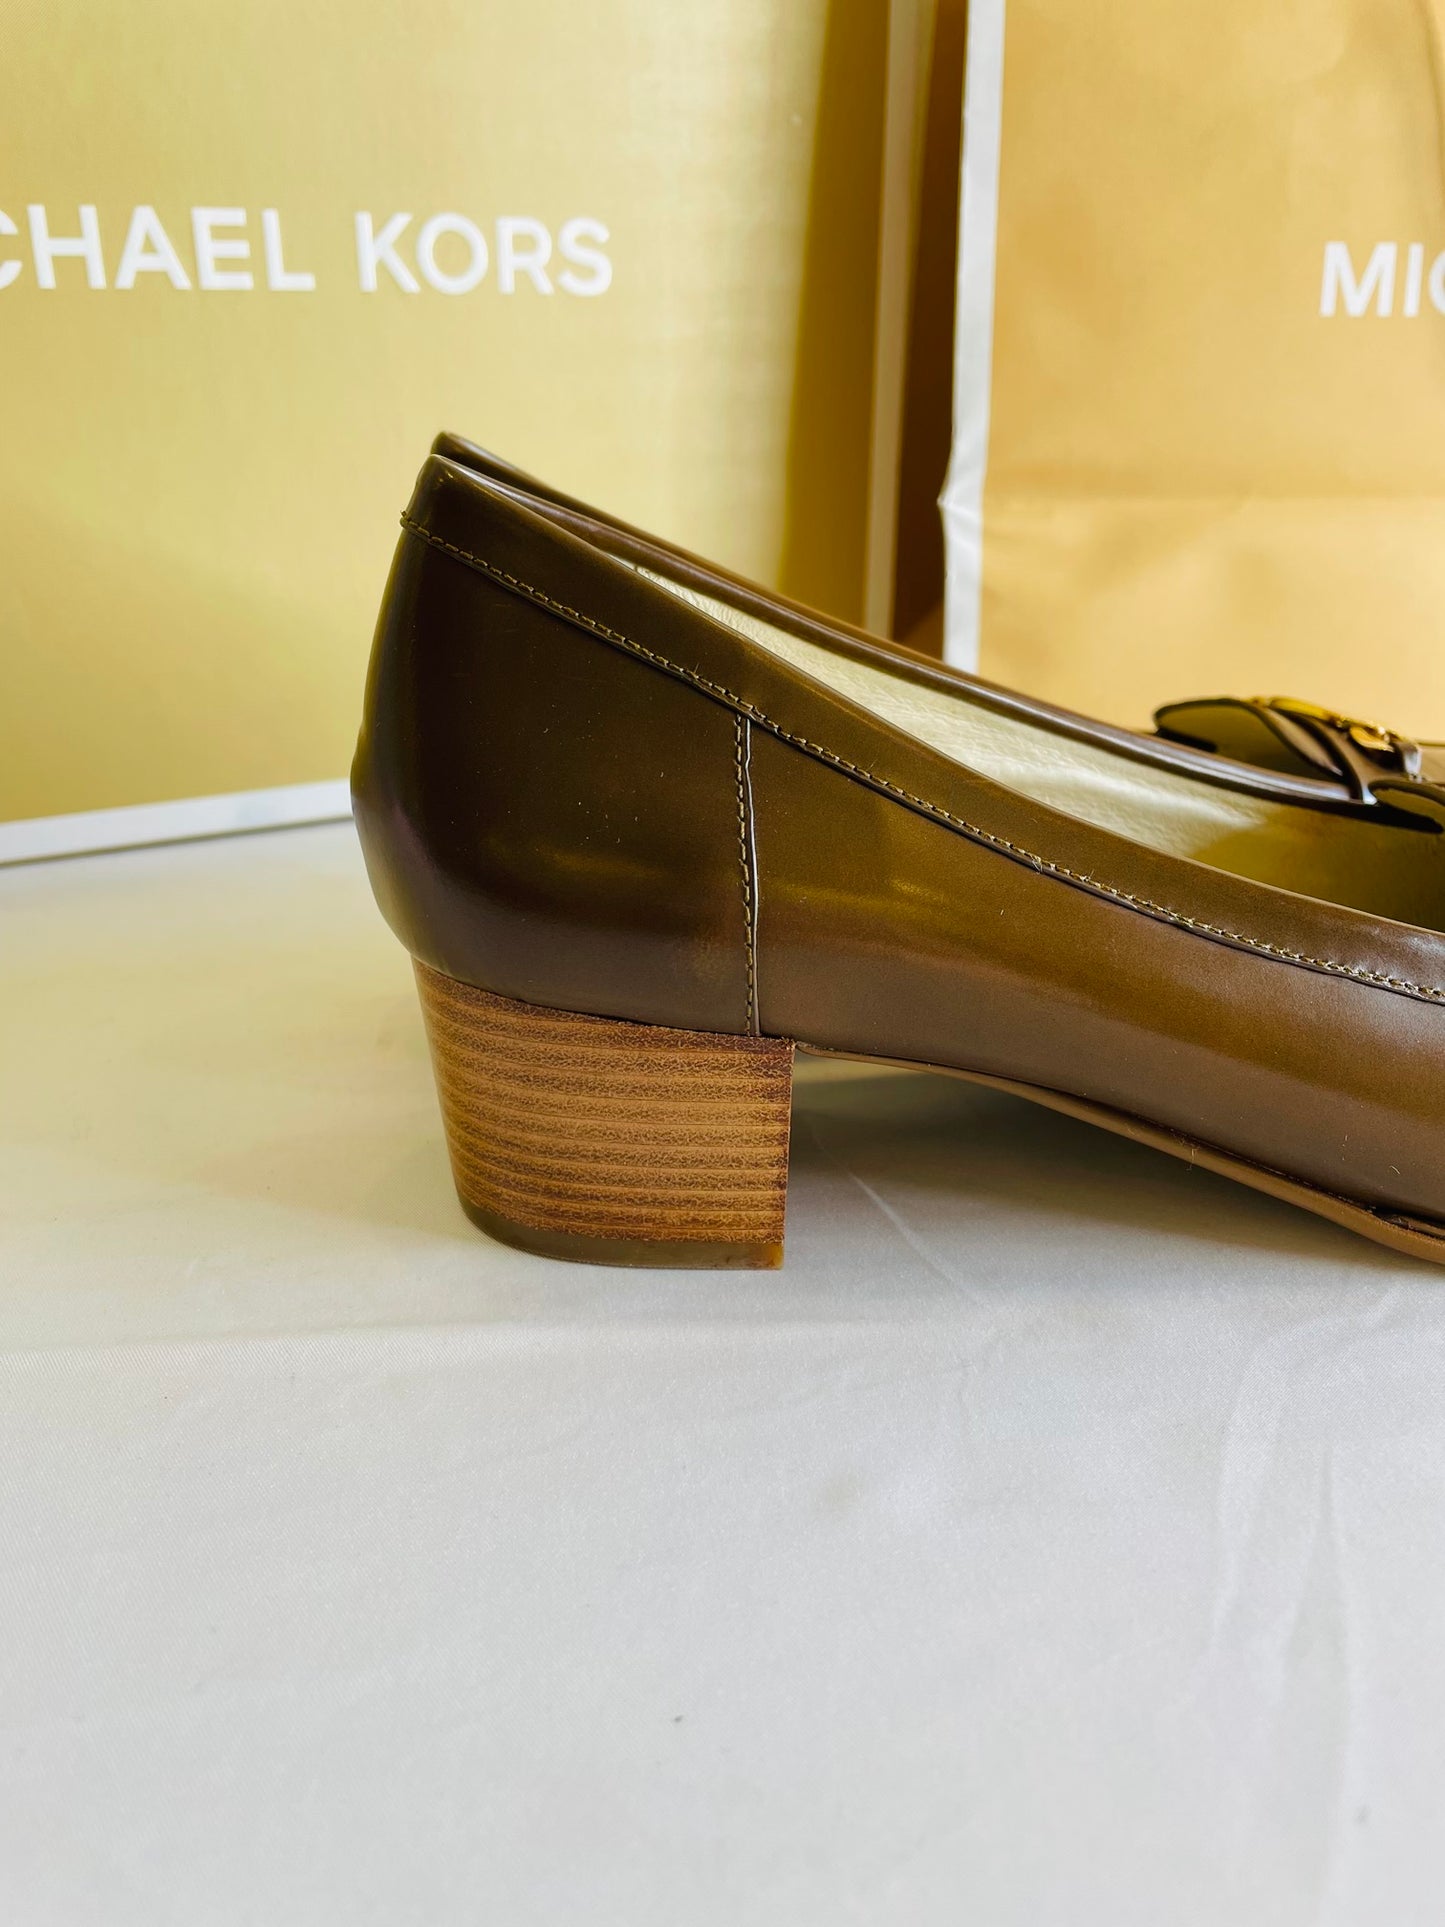 Michael kors shoes